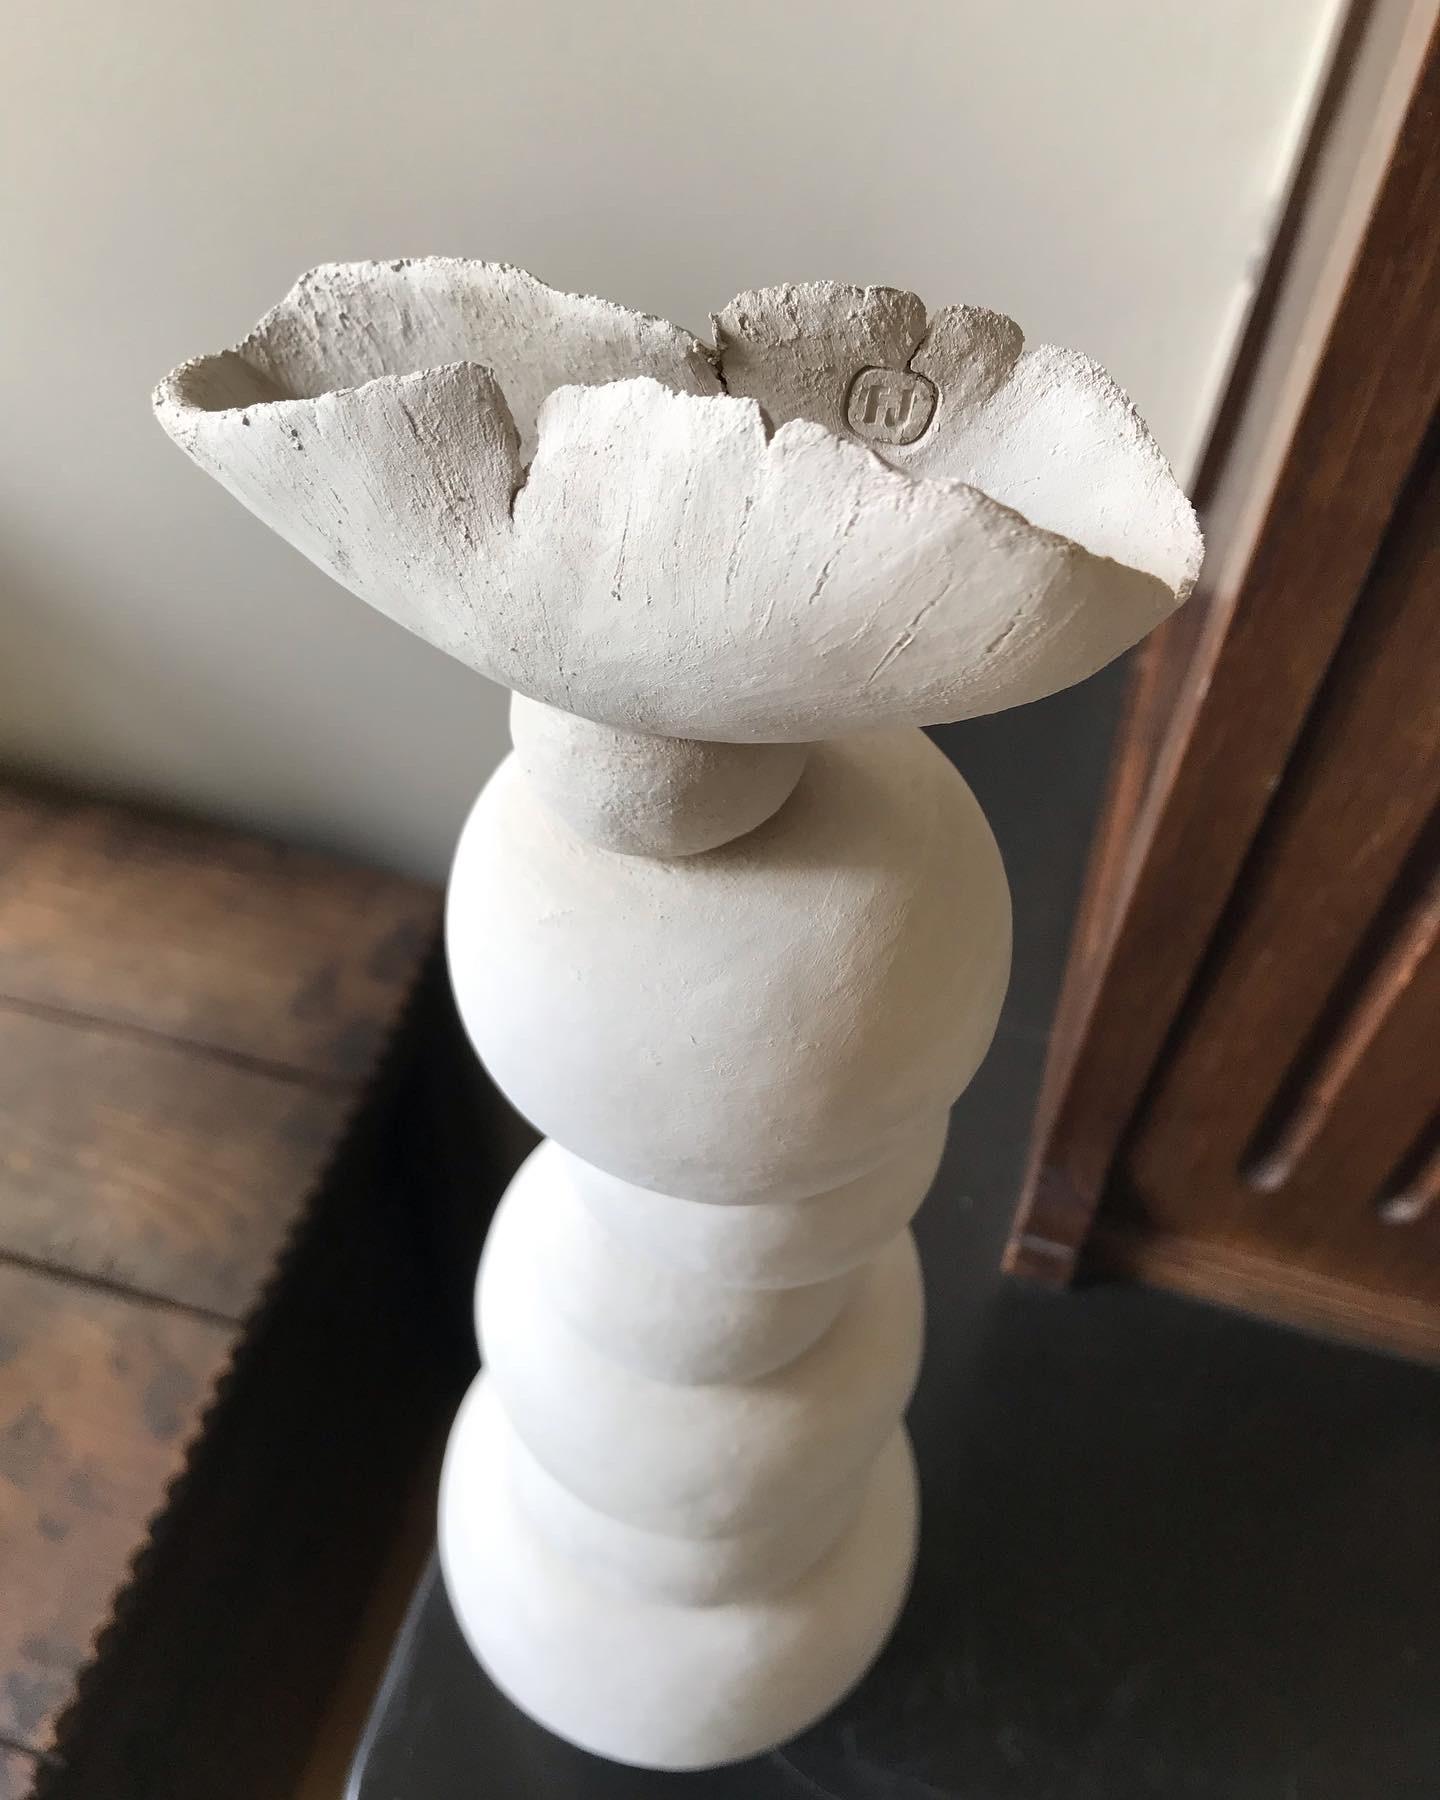 Modern Dutch Contemporary Sculptural Ceramic Art Modder Happy Tail by Françoise Jeffrey For Sale